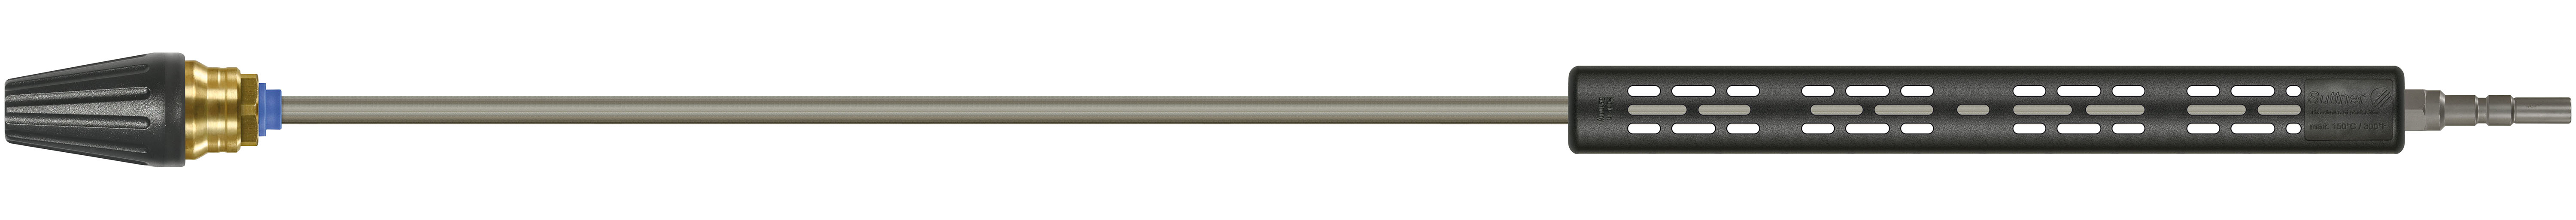 Rotabuse céramique avec lance 1000mm, 200-400 bar, Calibre 080